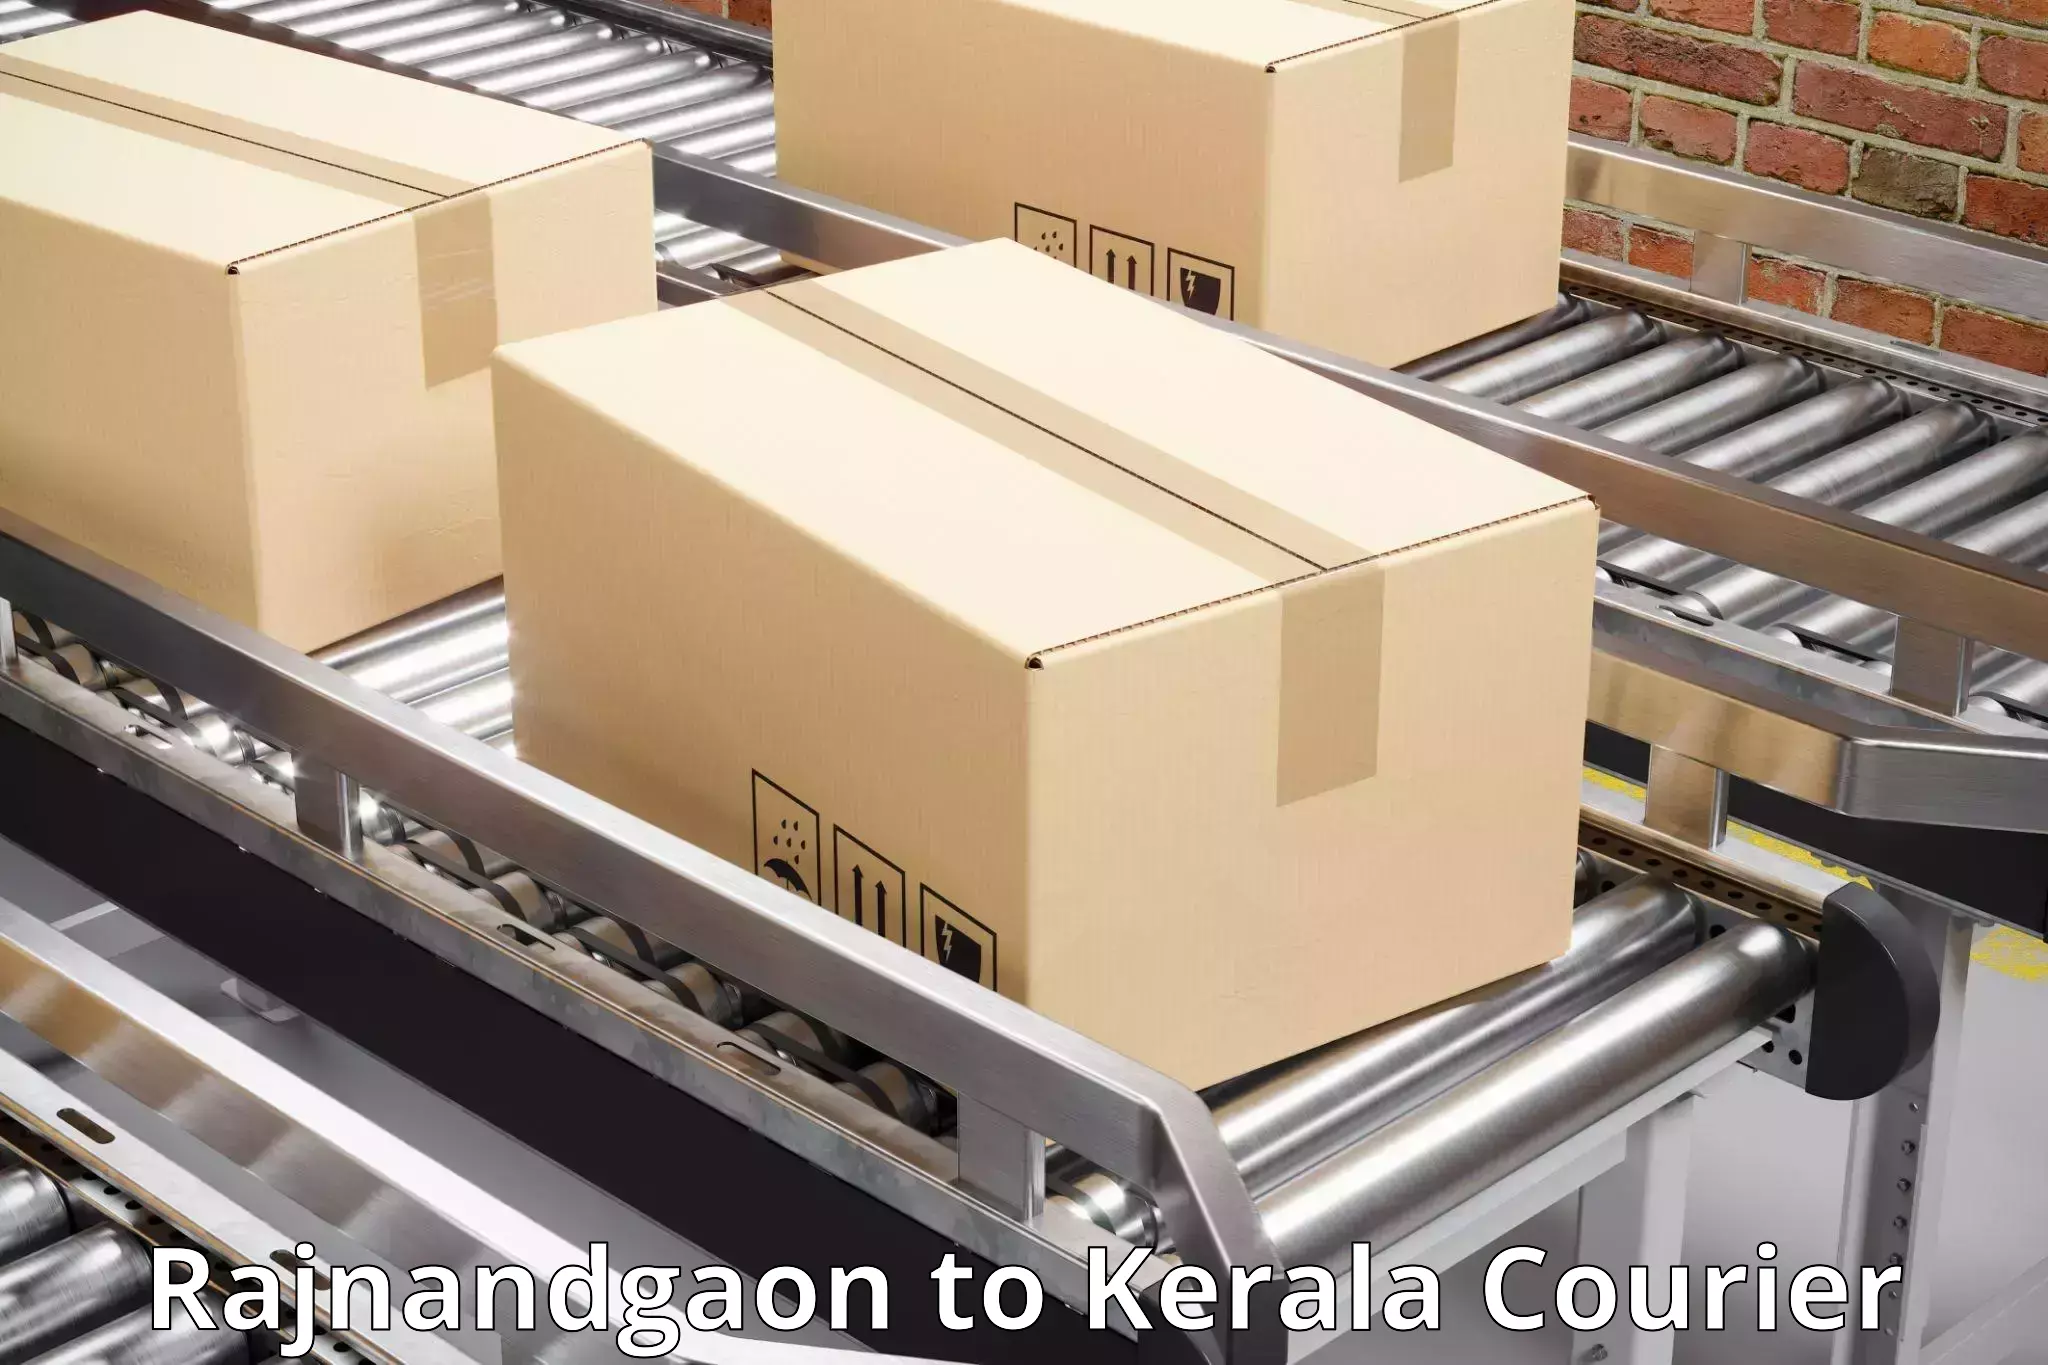 Seamless shipping experience Rajnandgaon to Malappuram